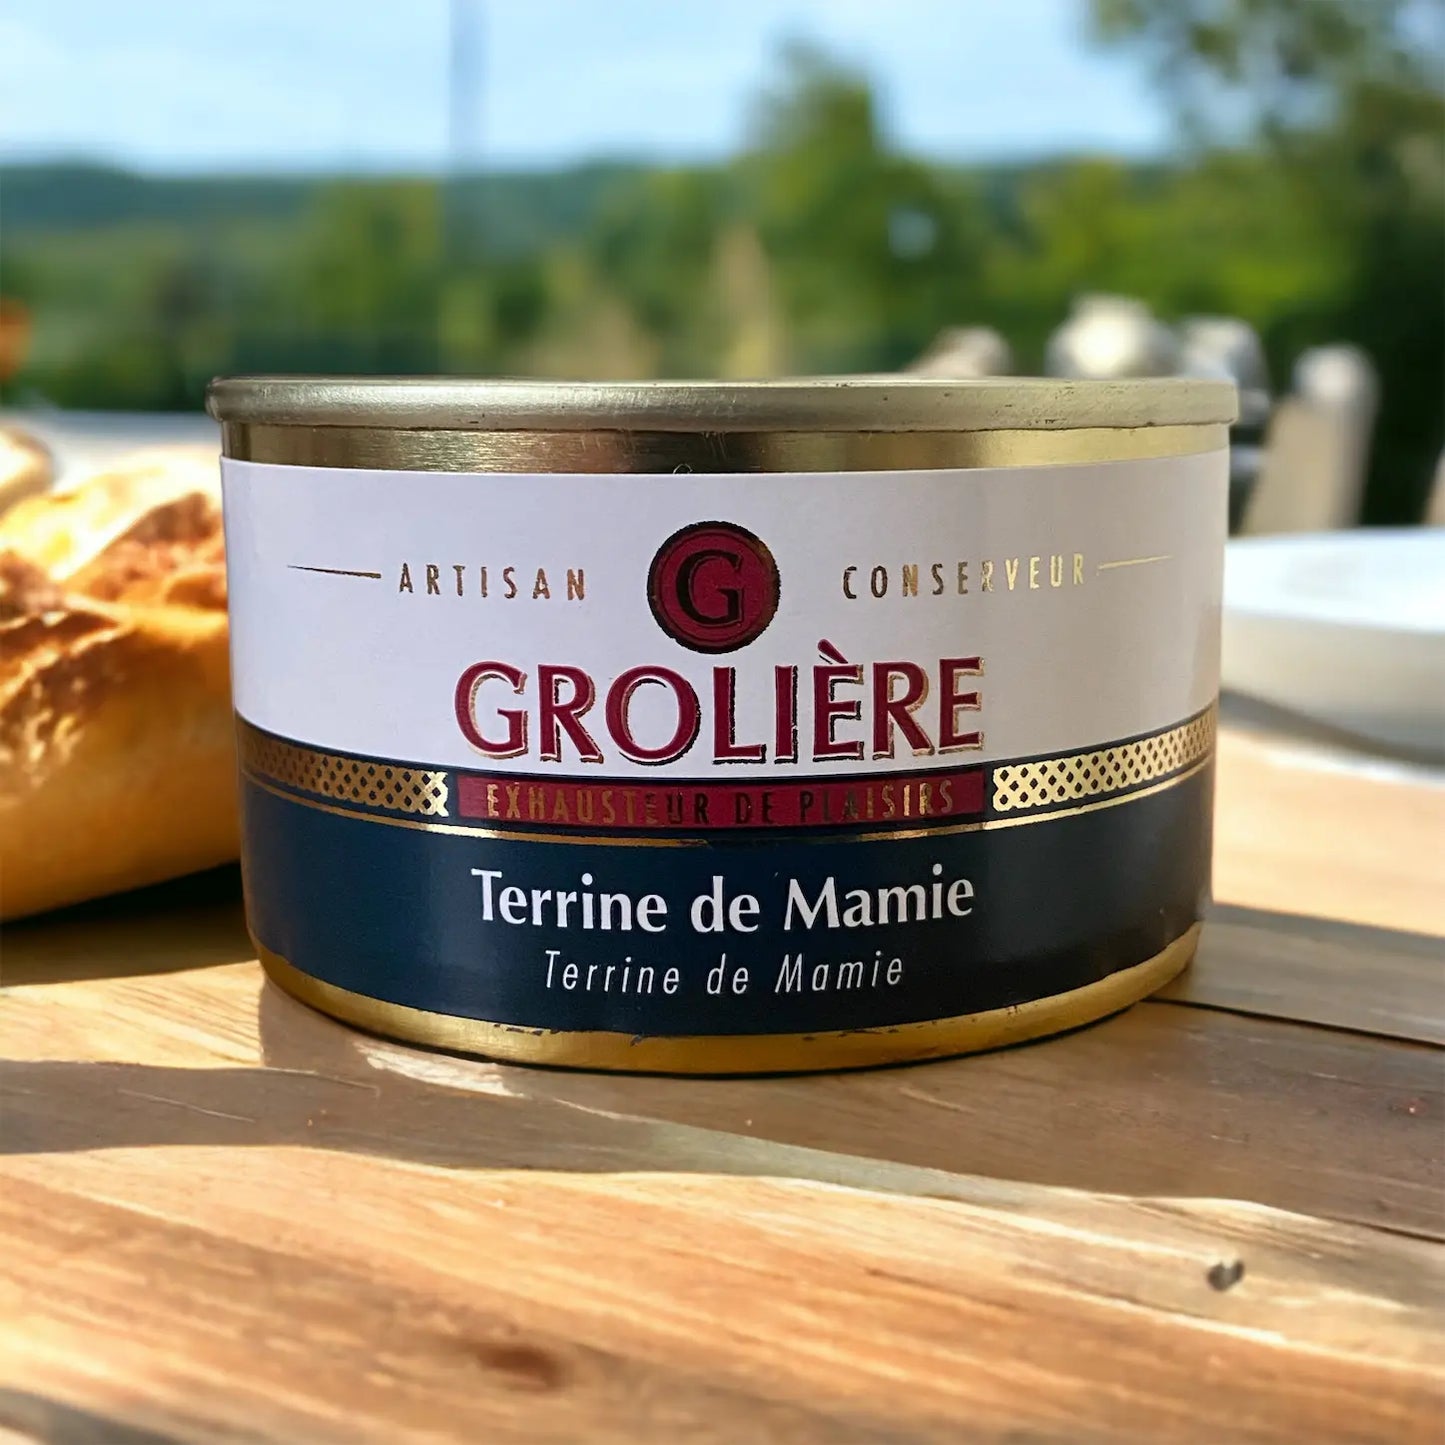 Terrine de Mamie, pâté, artisanal with foie gras